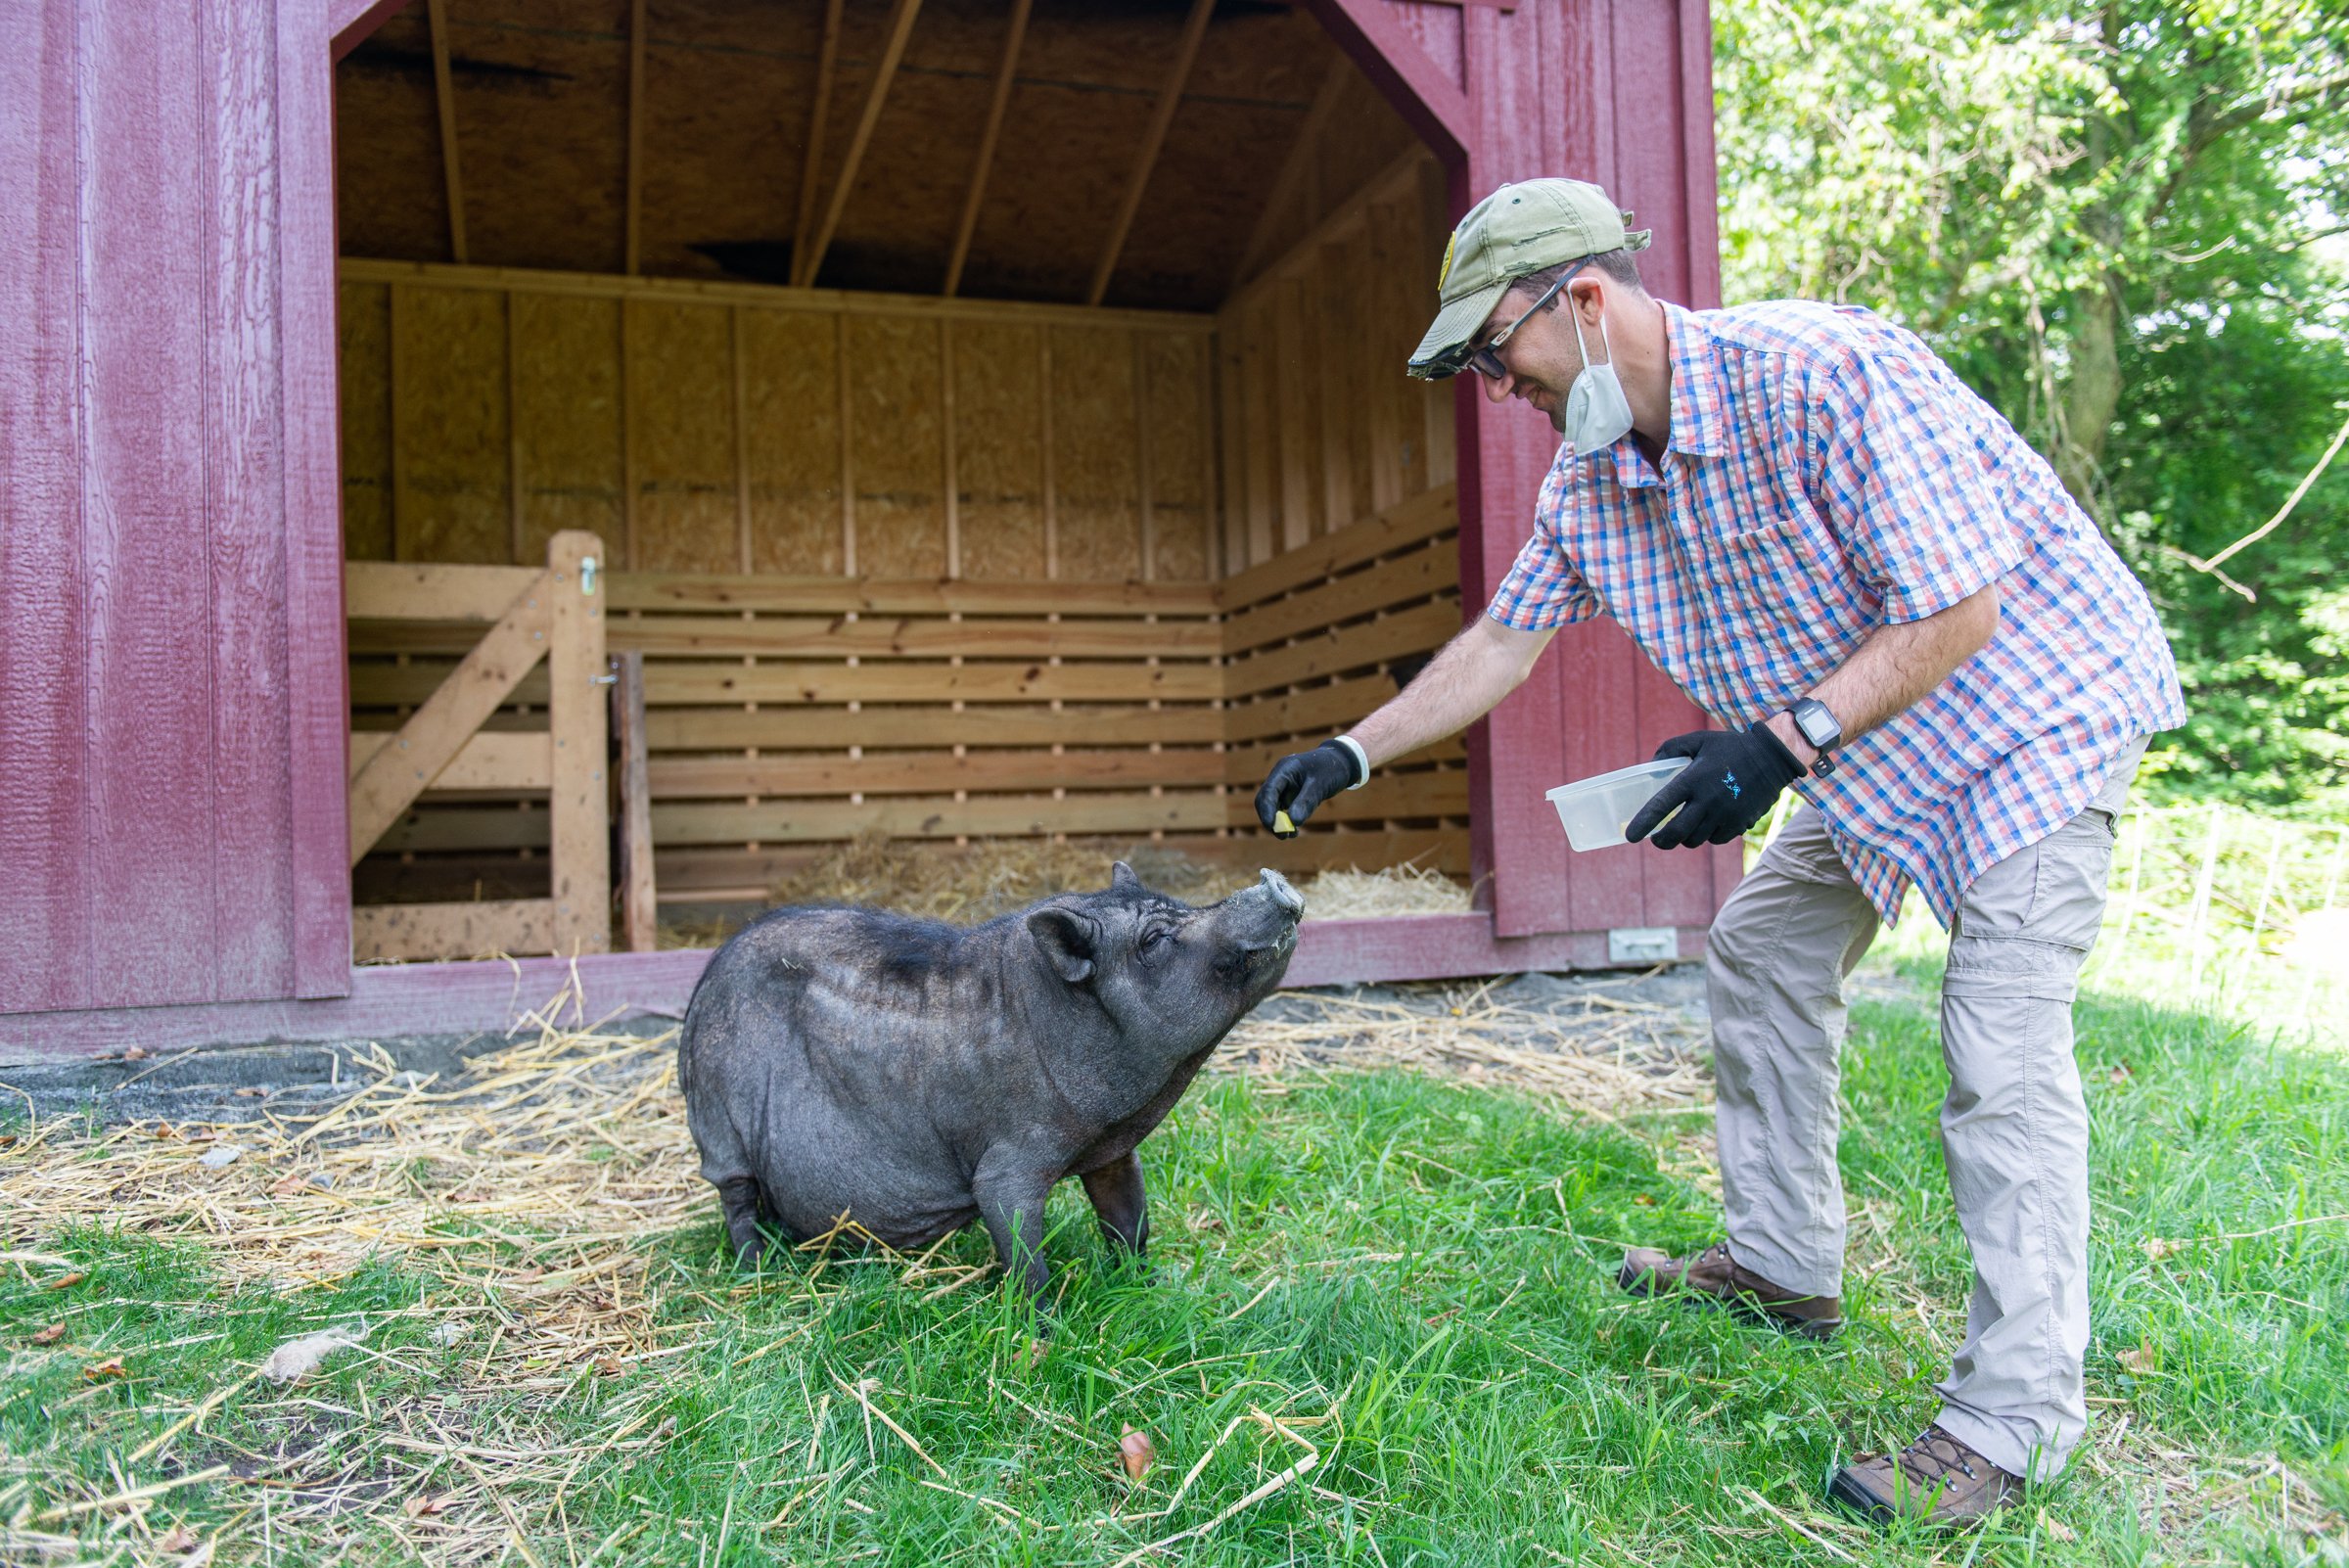 Michael cares for Penny in Soltane's Animal Husbandry program at Nantmel Farm